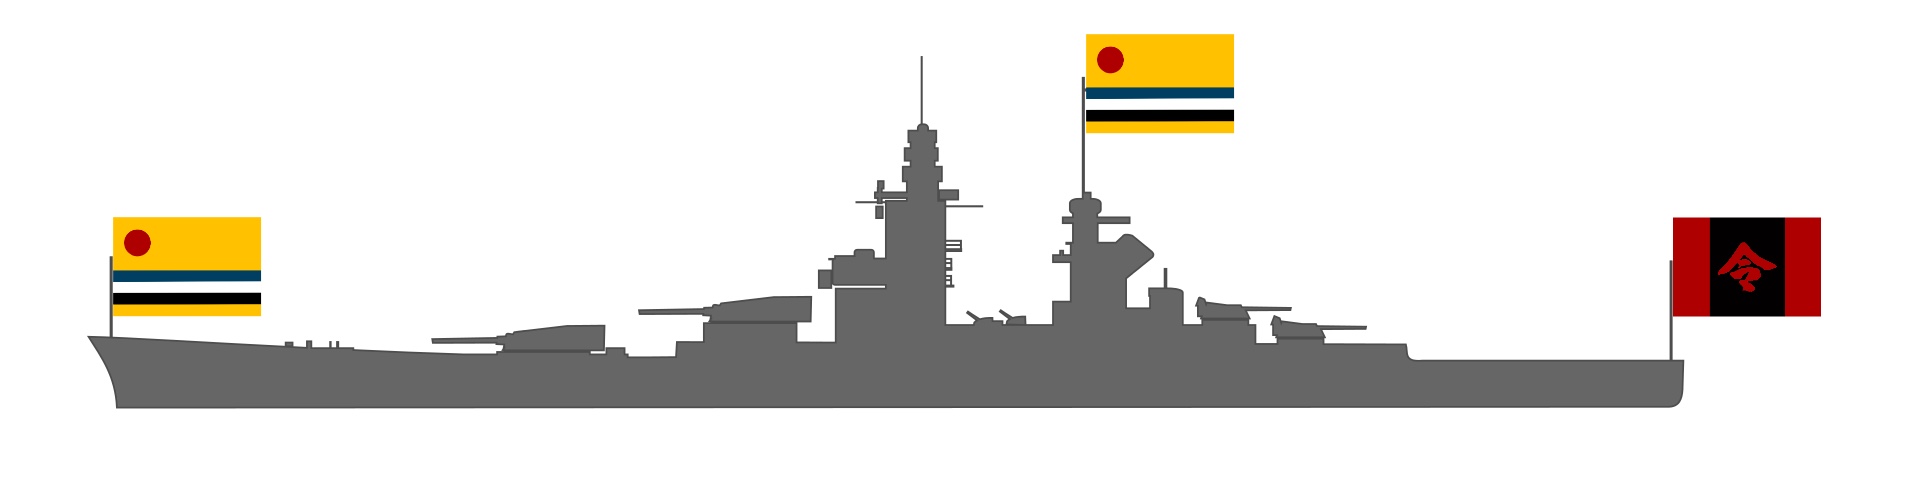 Maritime_flag_template_Vanguard_Troopers.jpg